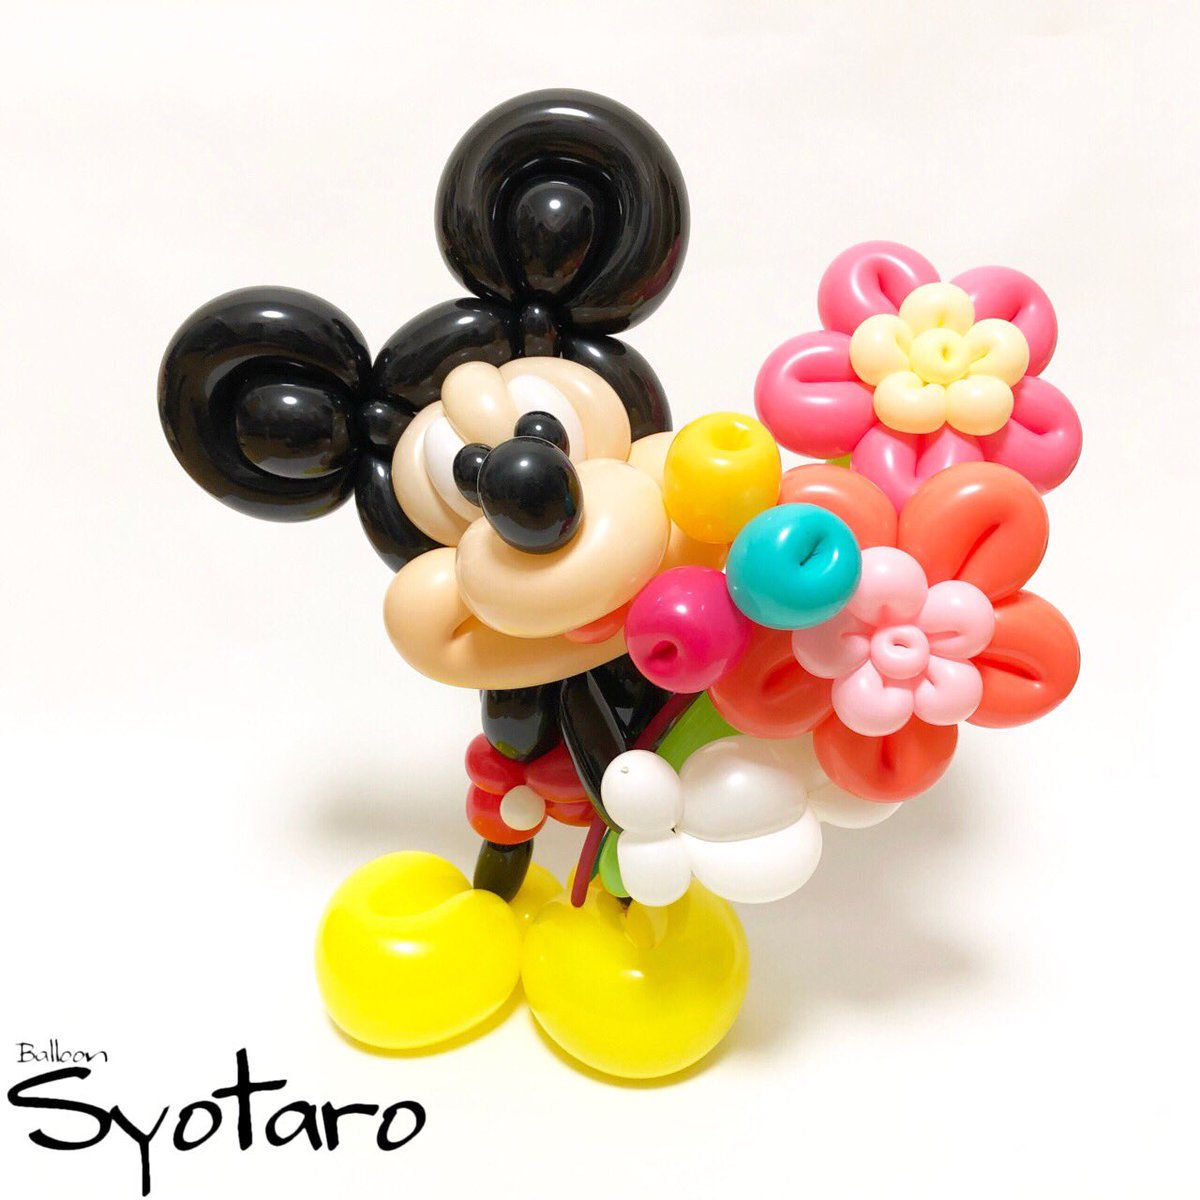 Balloon Syotaro En Twitter Mickey Mouse ミッキーマウス ミッキー バルーンアート